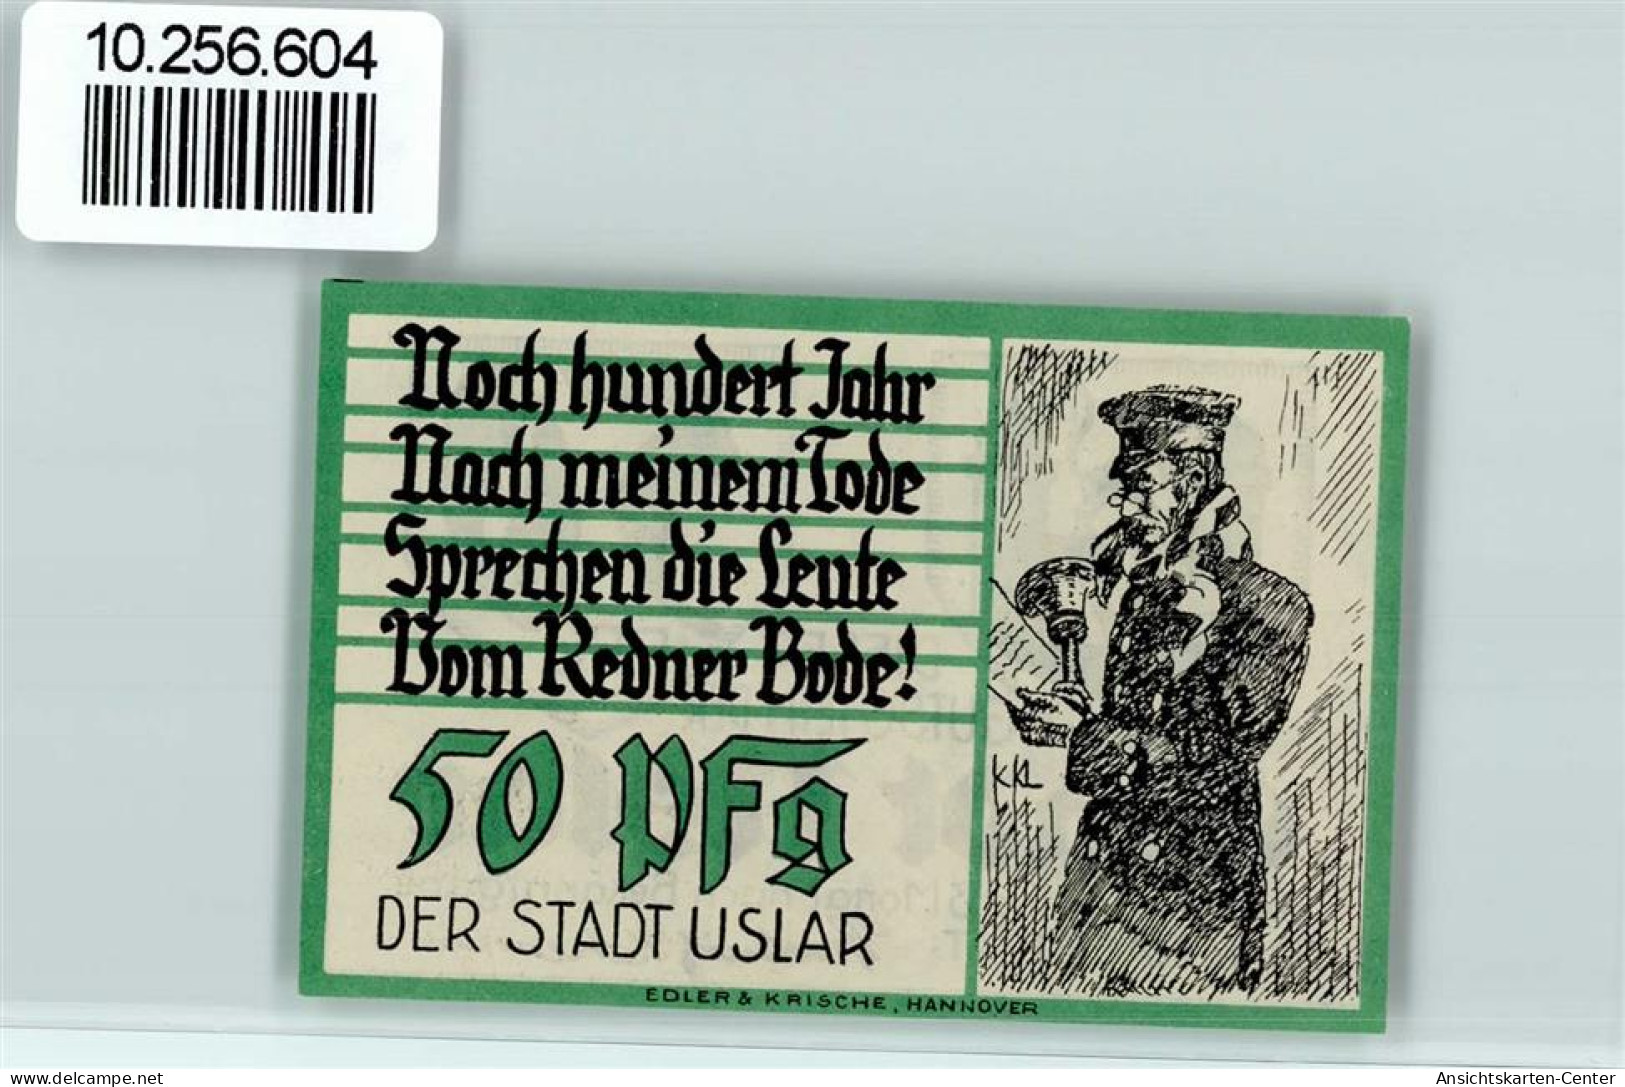 10256604 - Uslar - Uslar